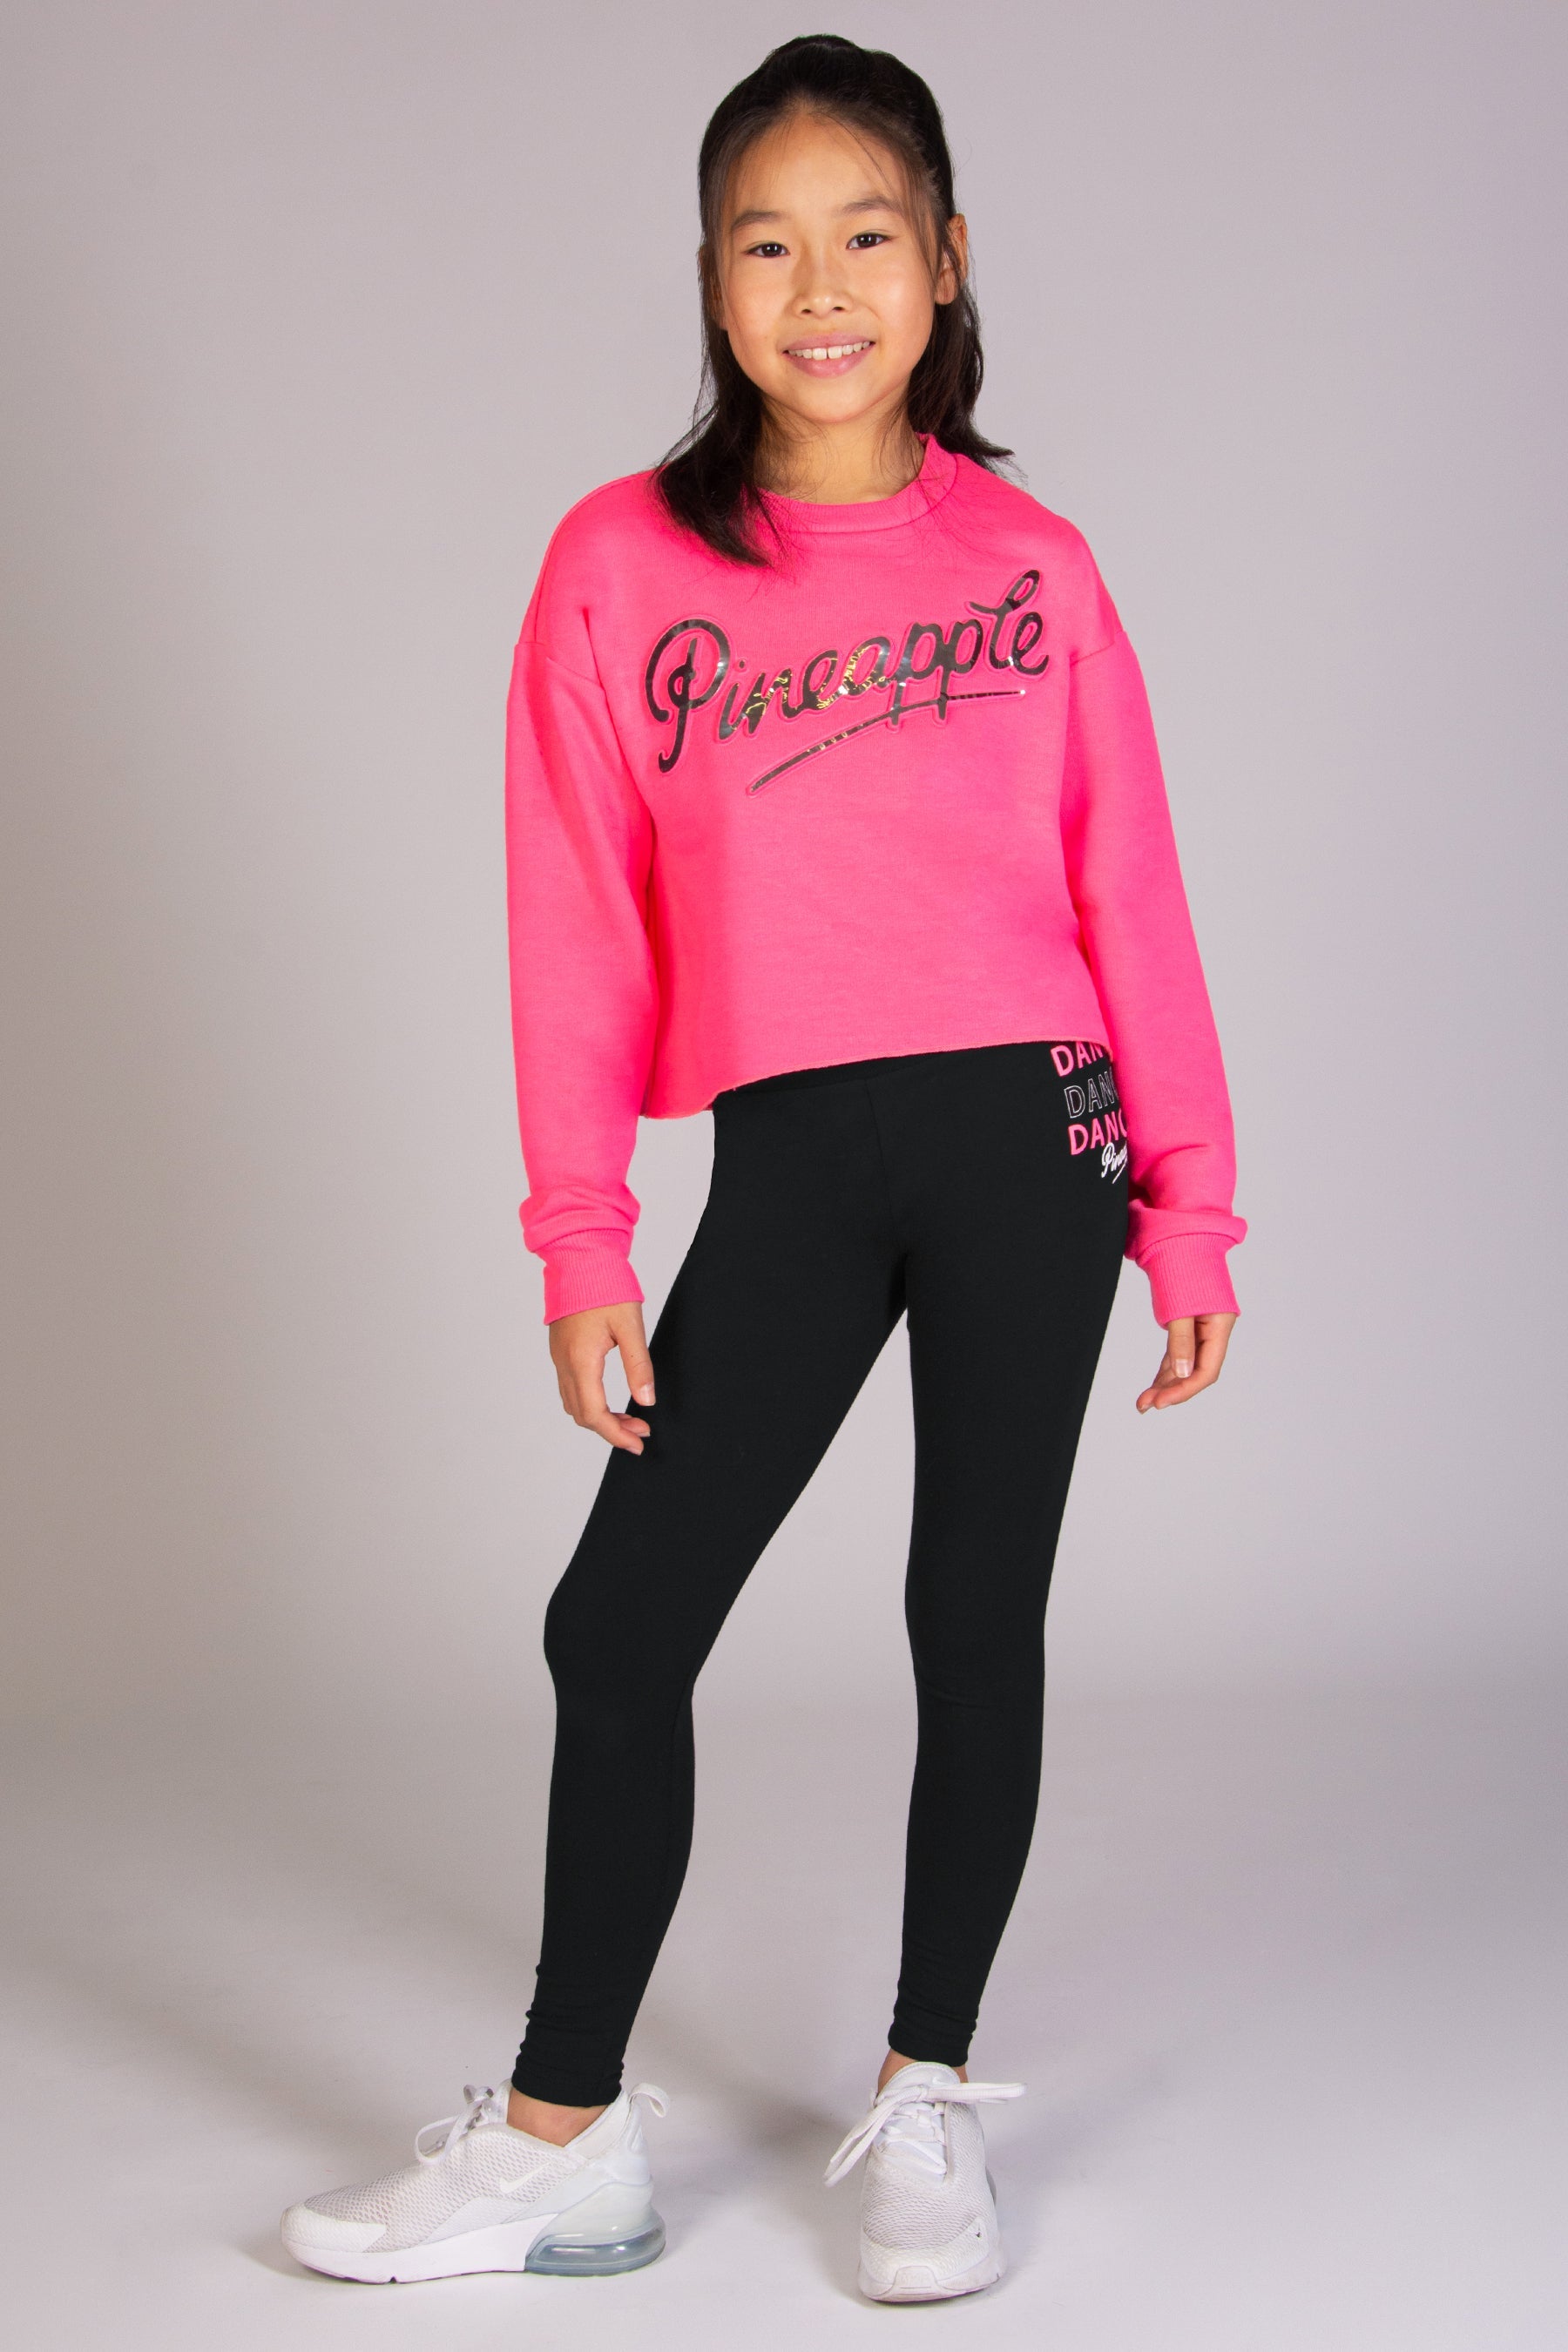 PINEAPPLE Dancewear Sale Girls Pink Jacquard Bra Top Cross Back Silver Logo  Dance Gym